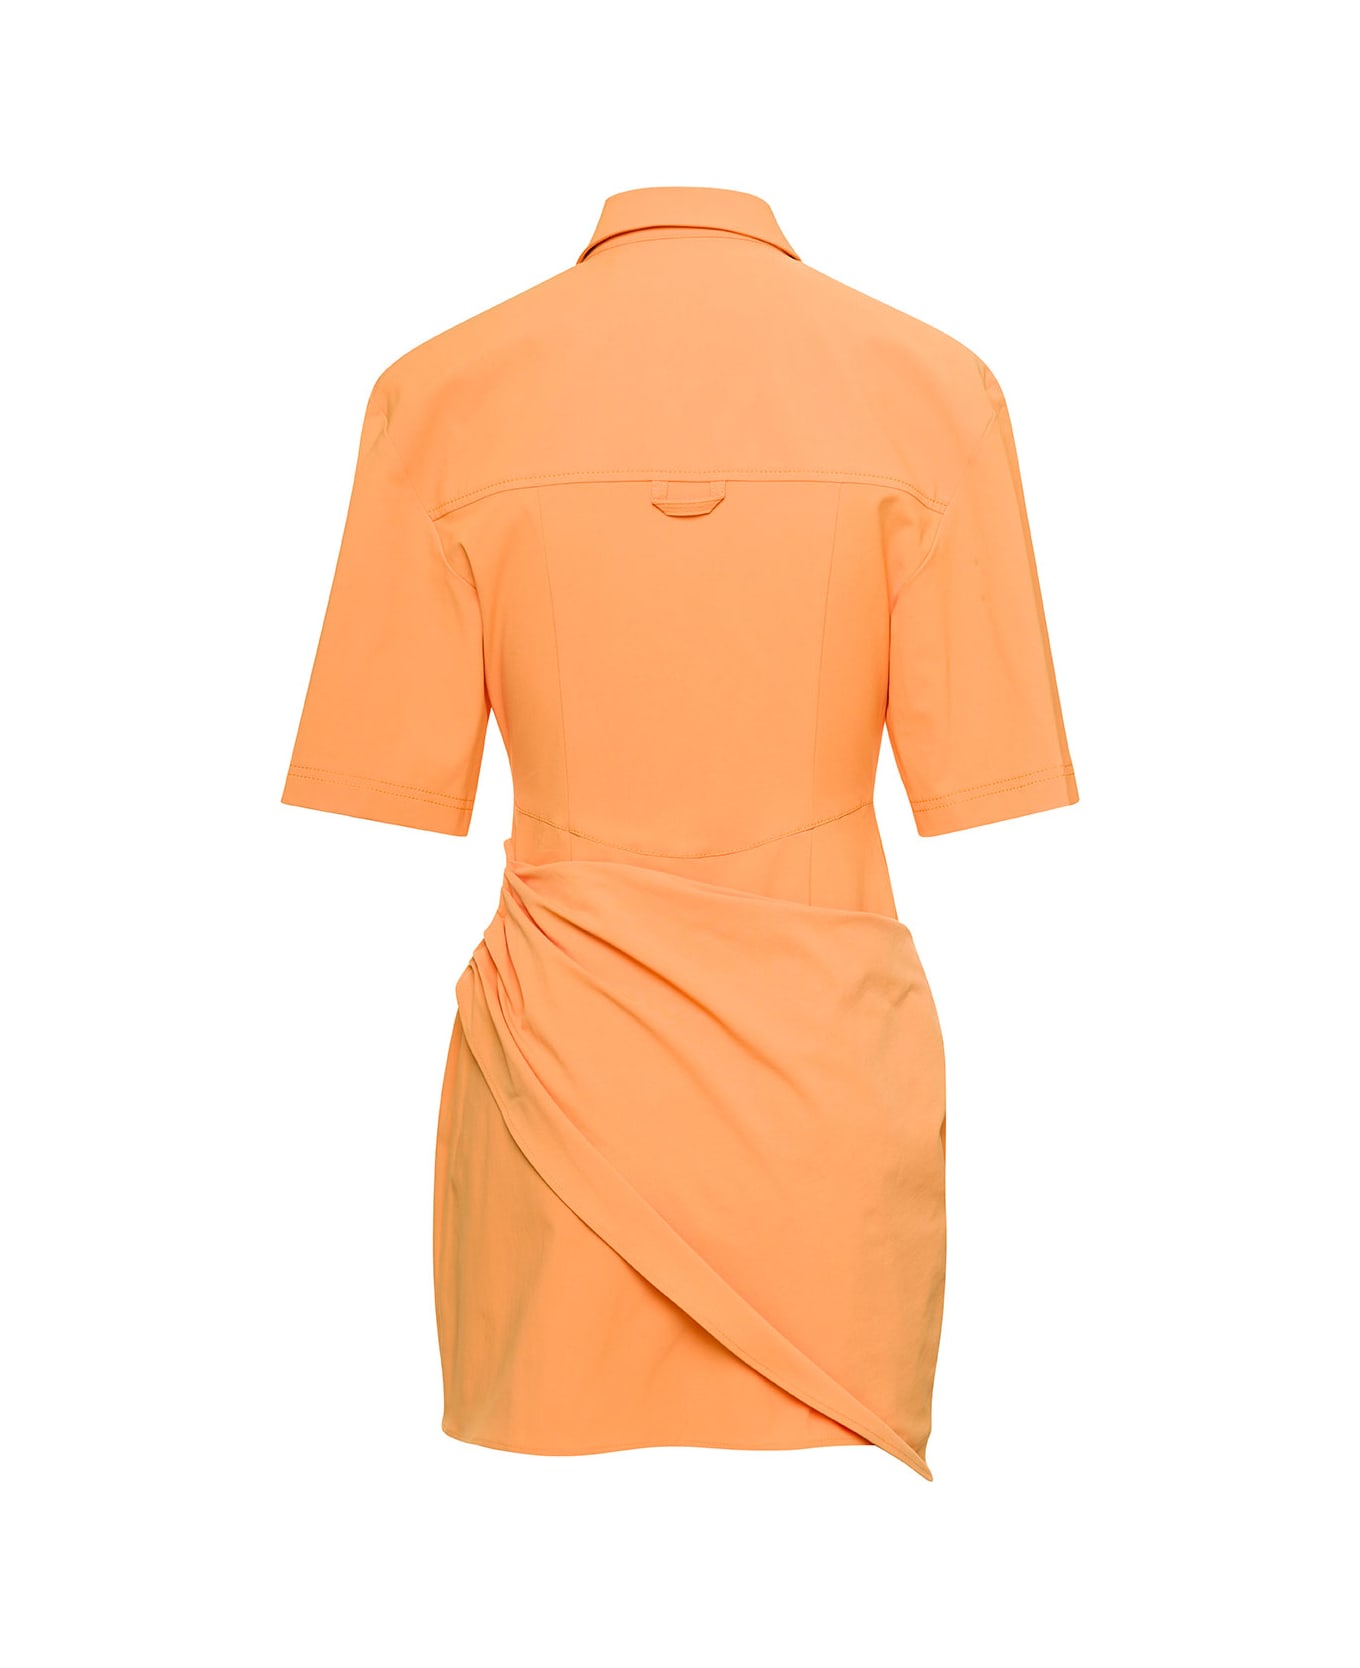 Jacquemus Orange Mini Shirt Dress La Robe Camisa In Cotton Blend Woman - Orange